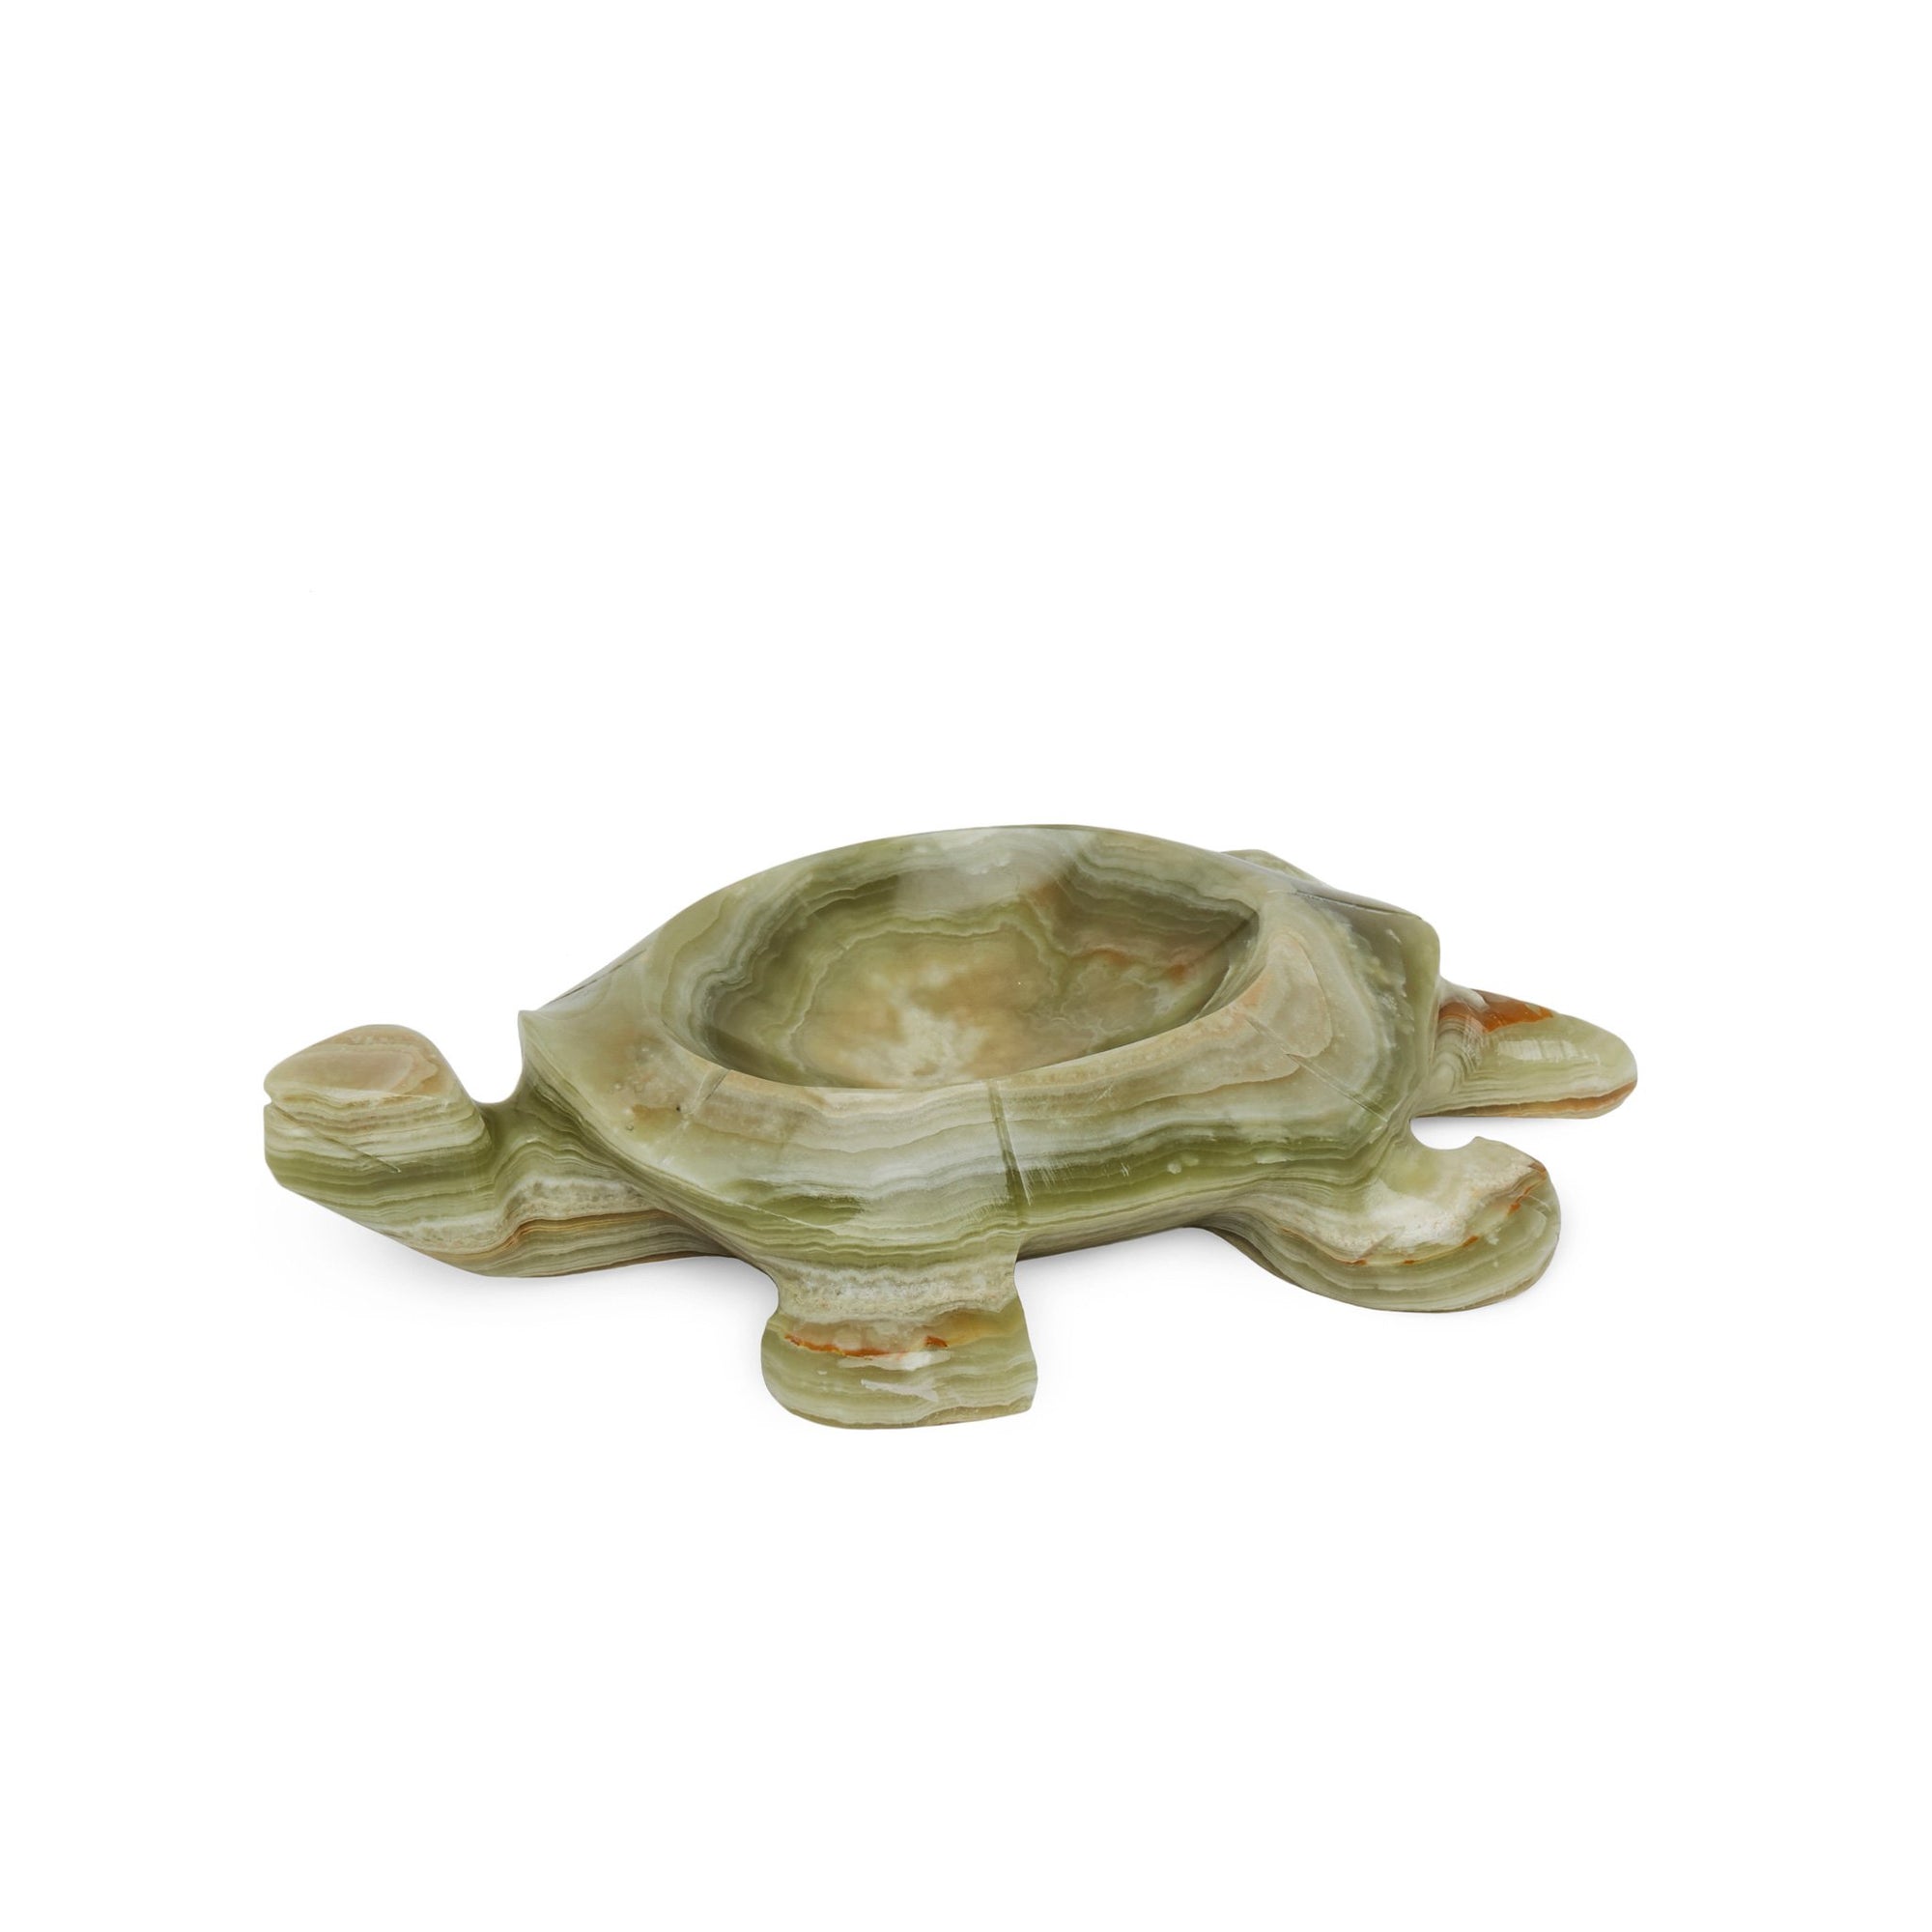 3366-GROX Sherle Wagner International Stone Turtle Soap Dish in Green Onyx